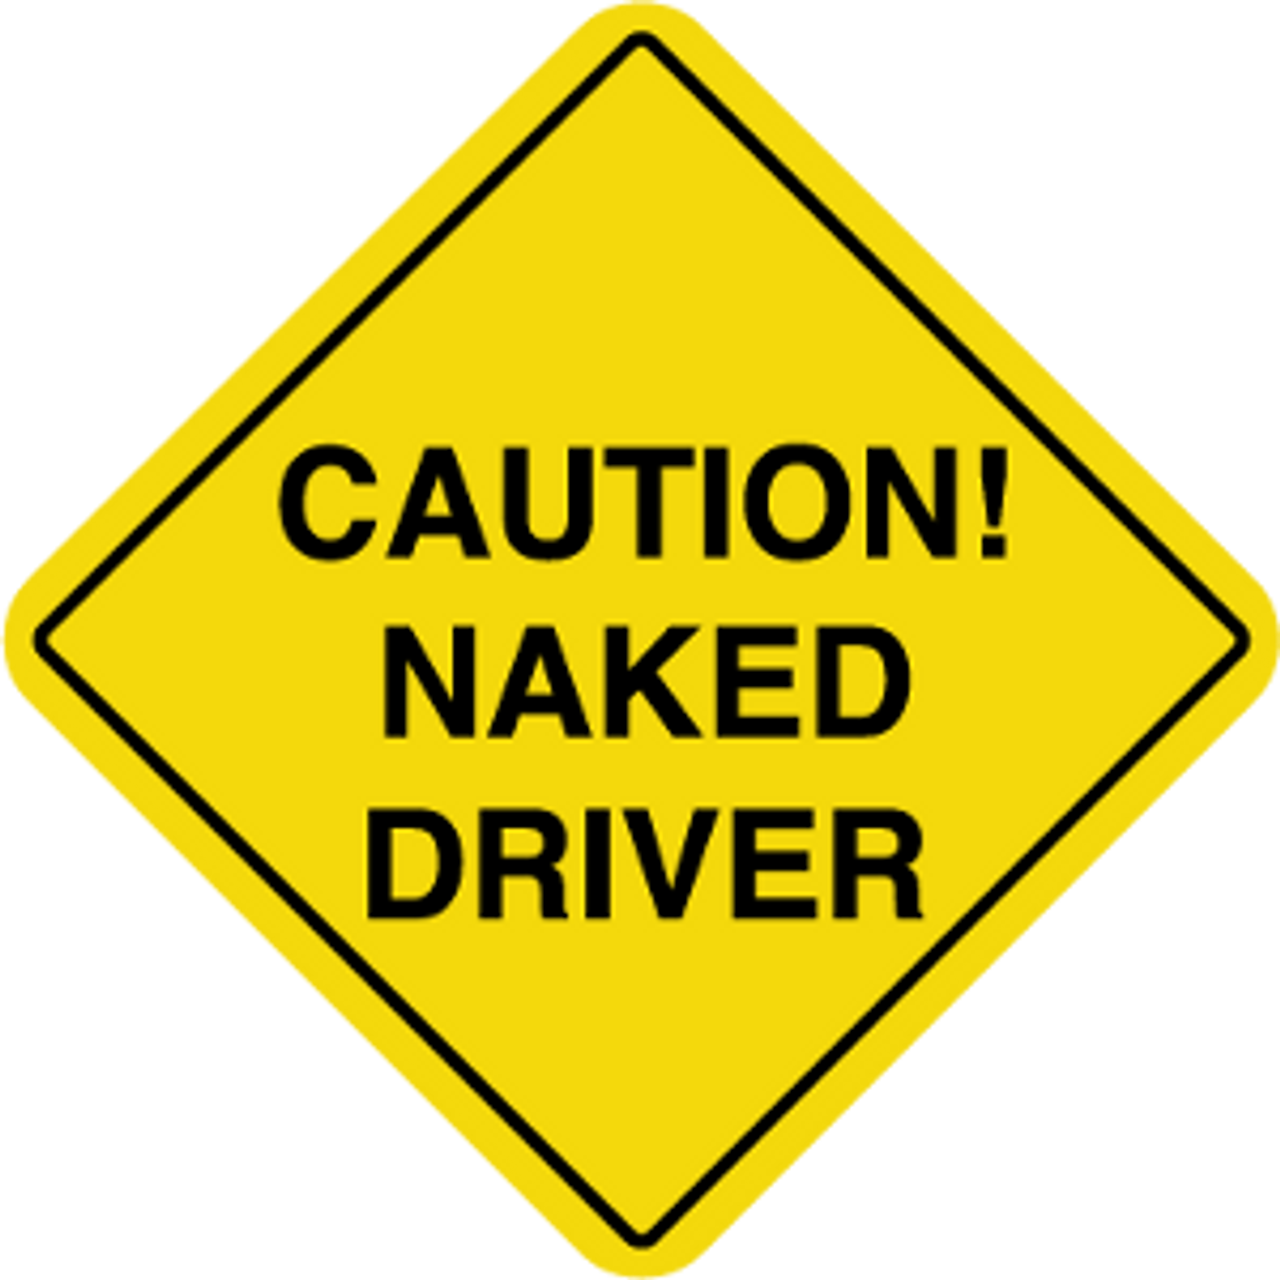 Driving Warning Decal